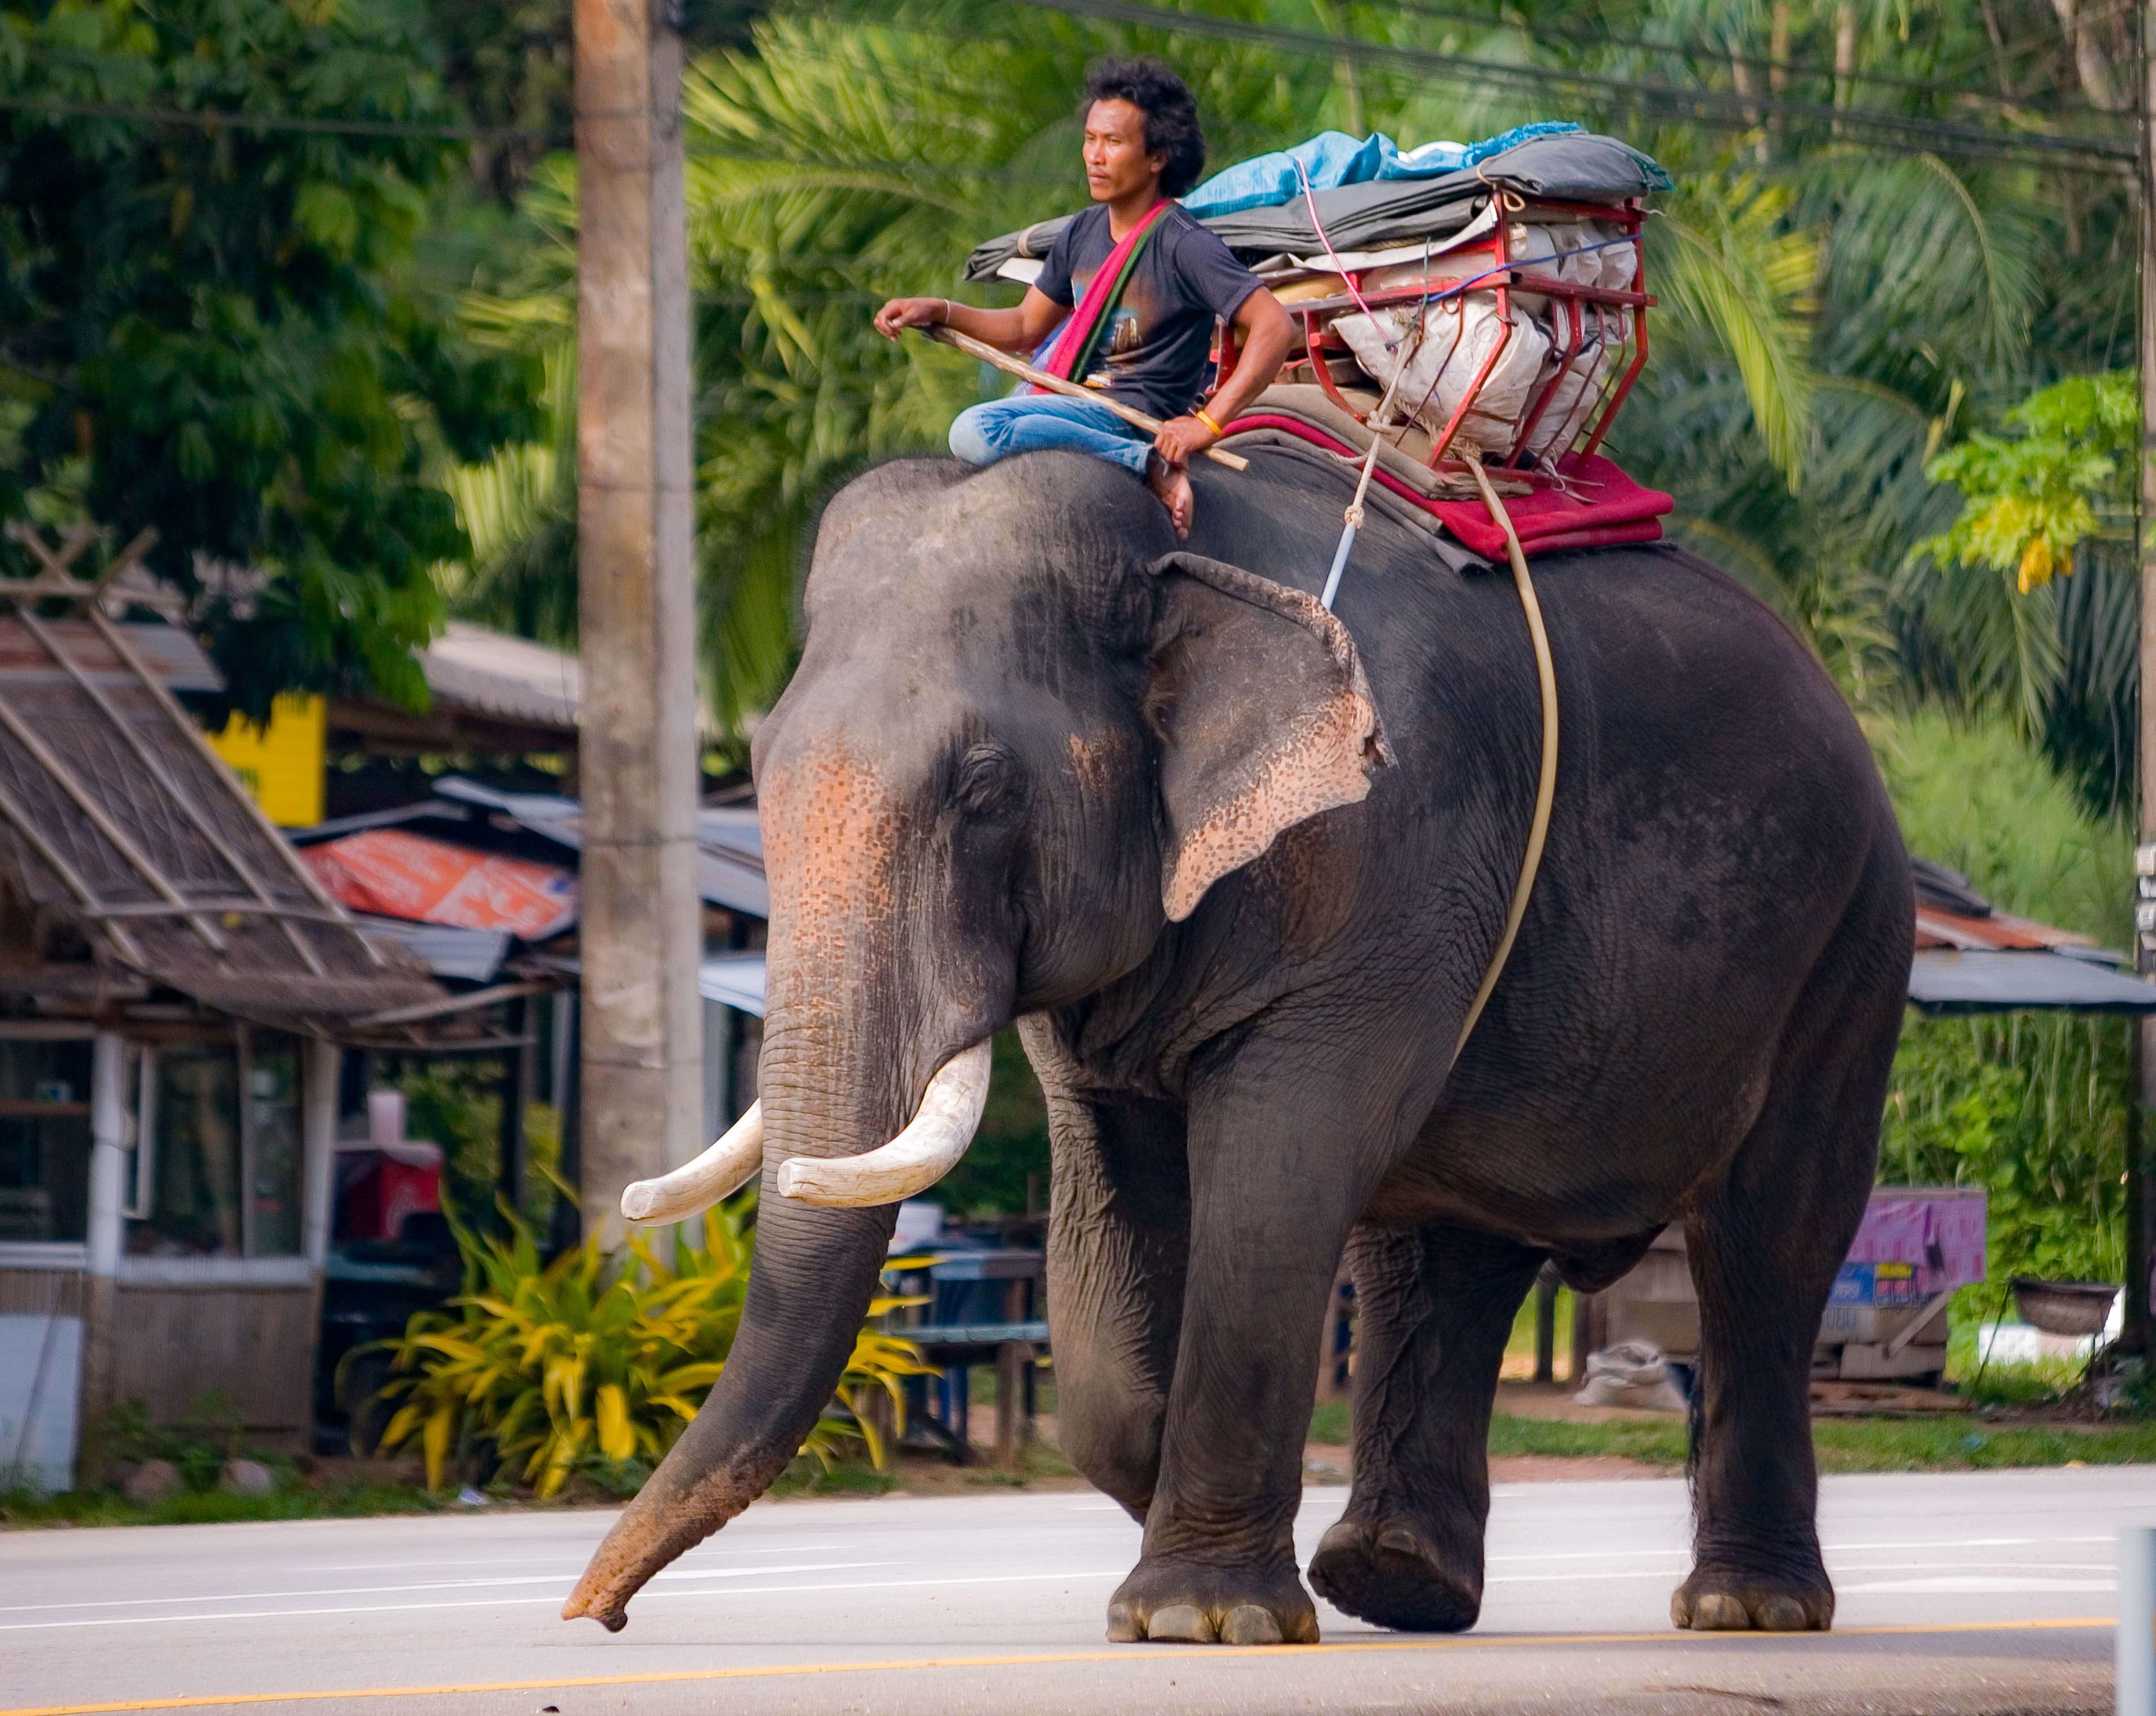 Thailand, Chumphon Prov, Elephant and Rider, 2008, IMG 1413